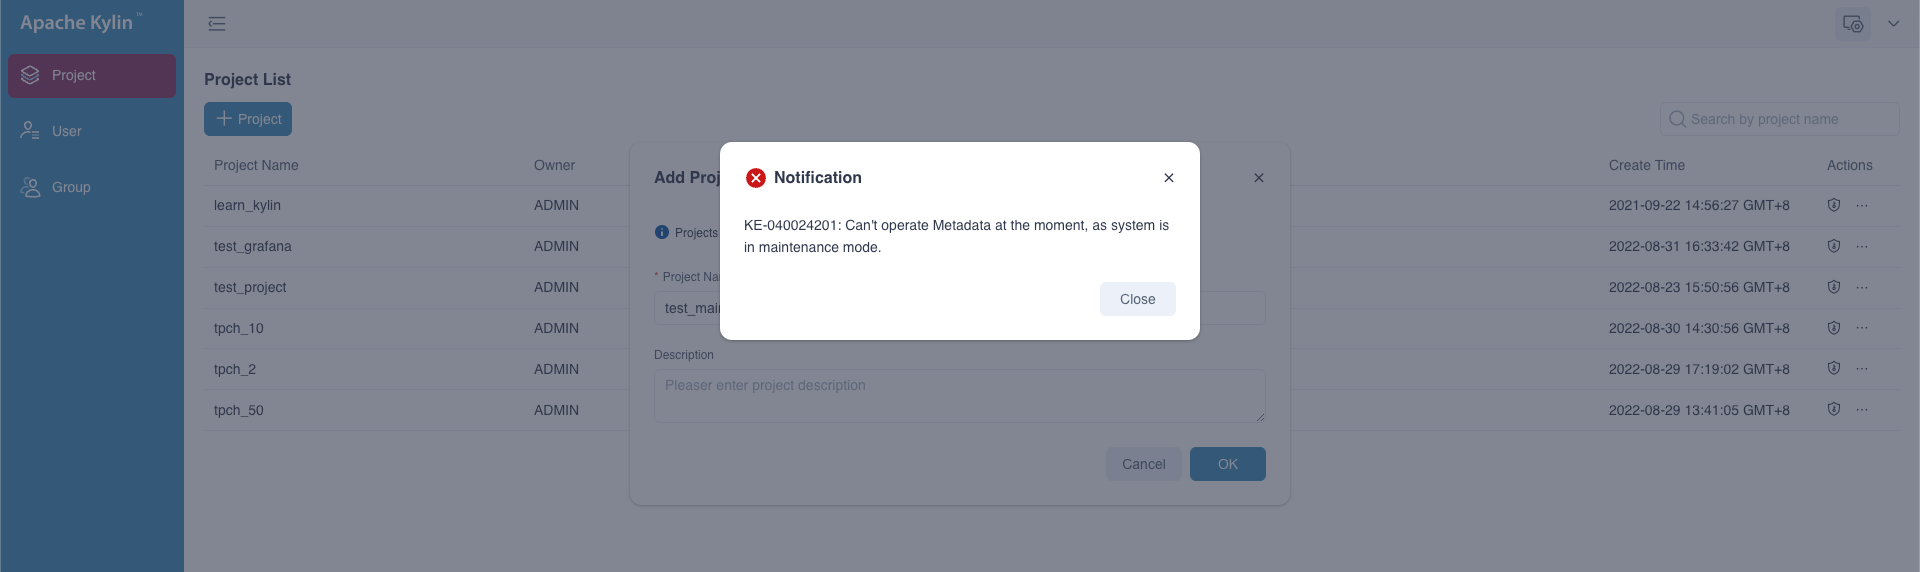 forbidden modify metadata during maintenance mode